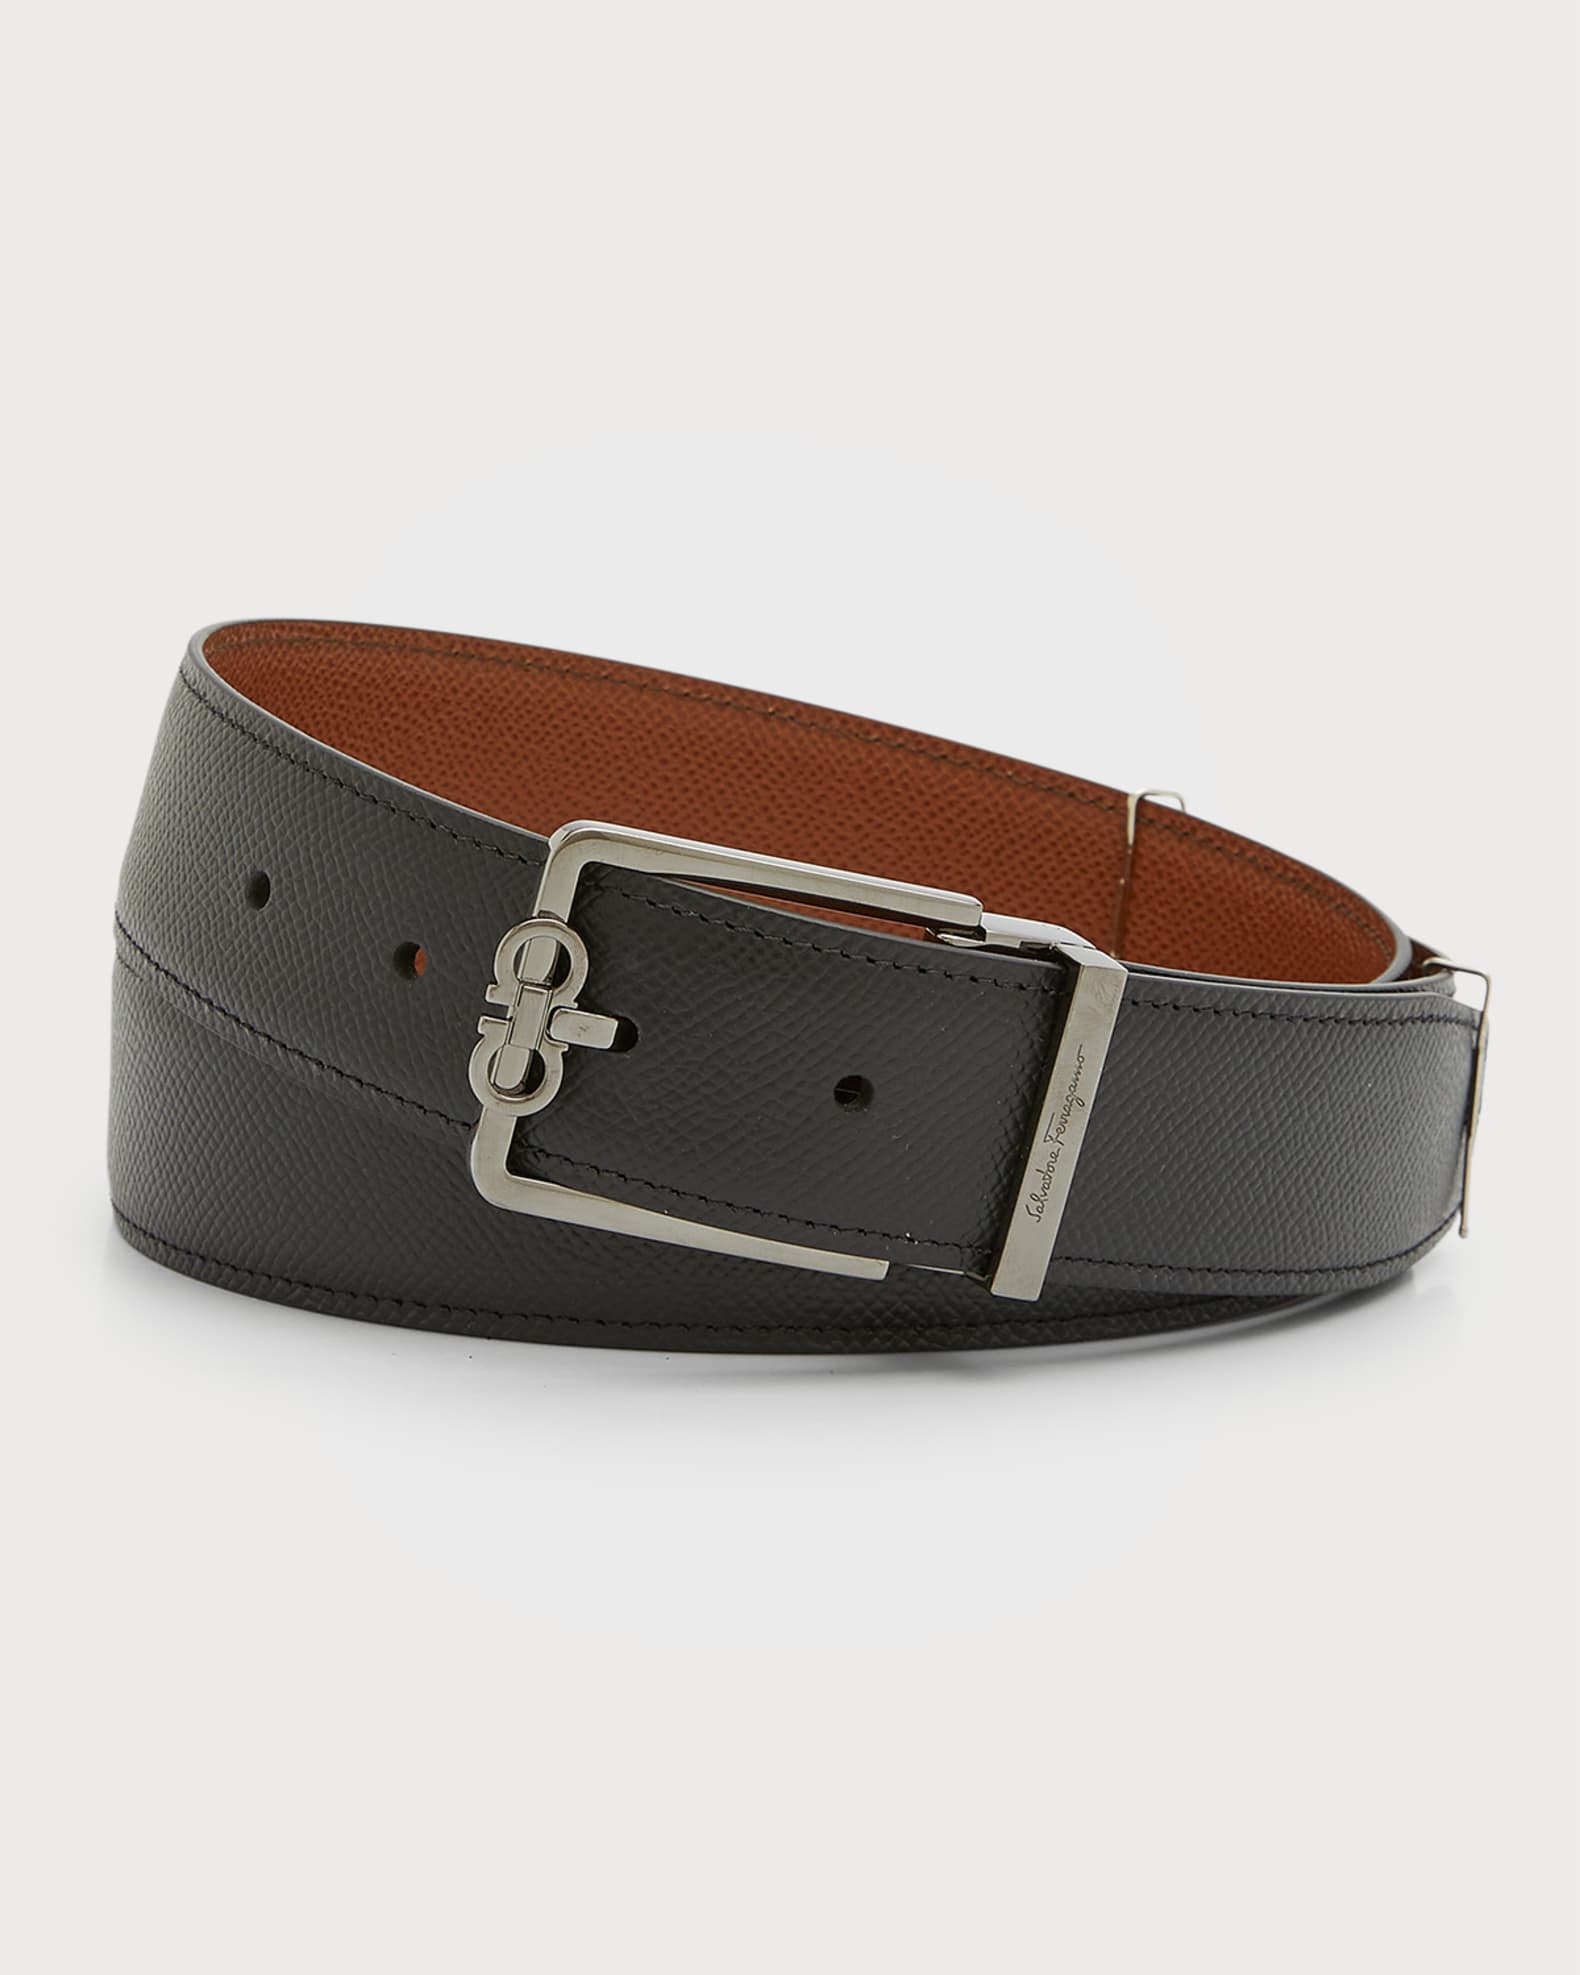 Salvatore Ferragamo Men's Reversible Leather Belt - 40 / Black/Brown